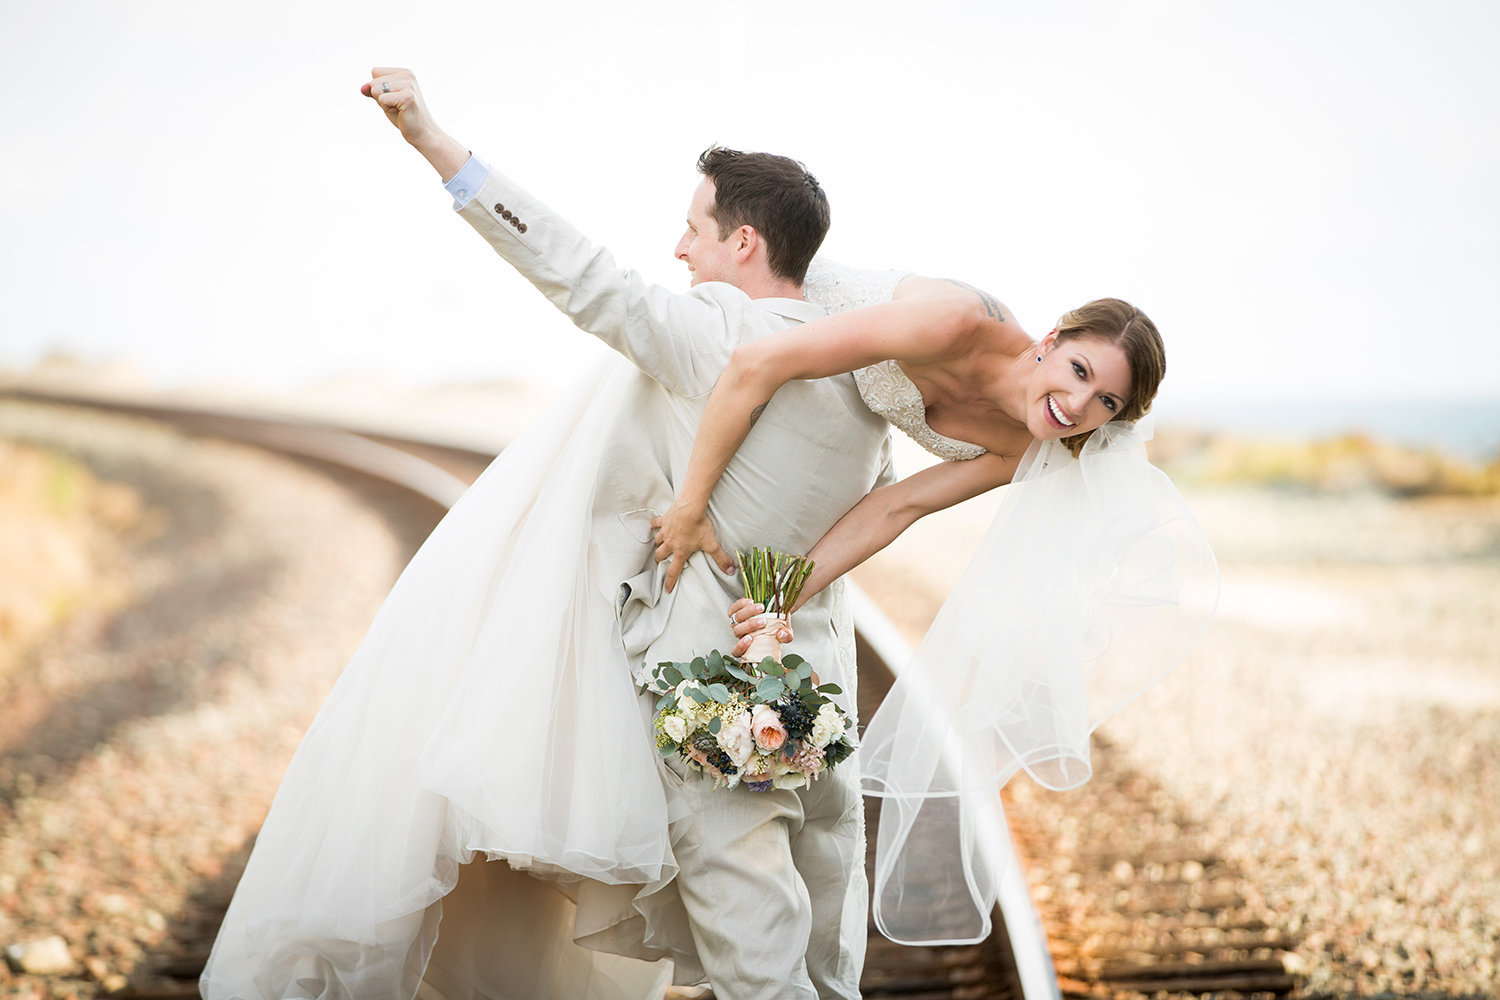 Seagrove Park wedding photos fun couple on train tracks